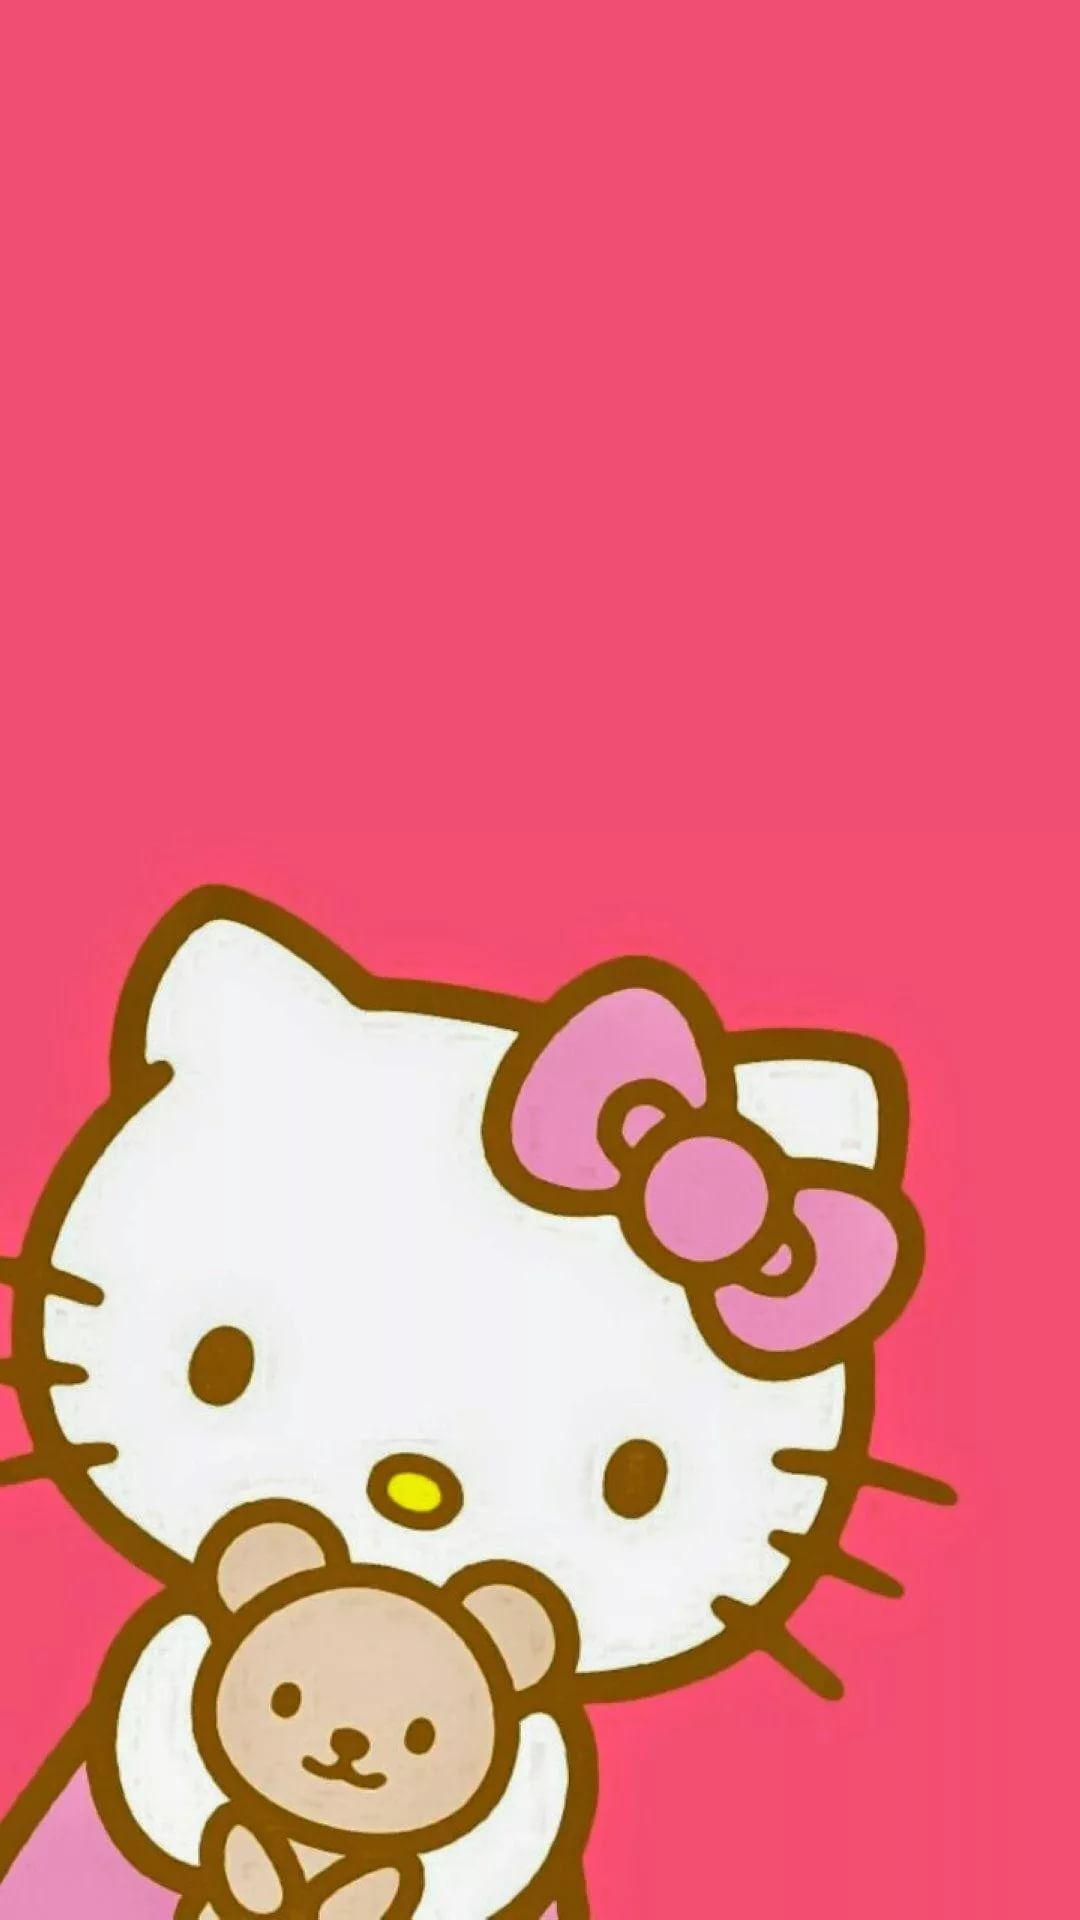 Cute Hello Kitty Phone Wallpapers - Top Free Cute Hello Kitty Phone ...